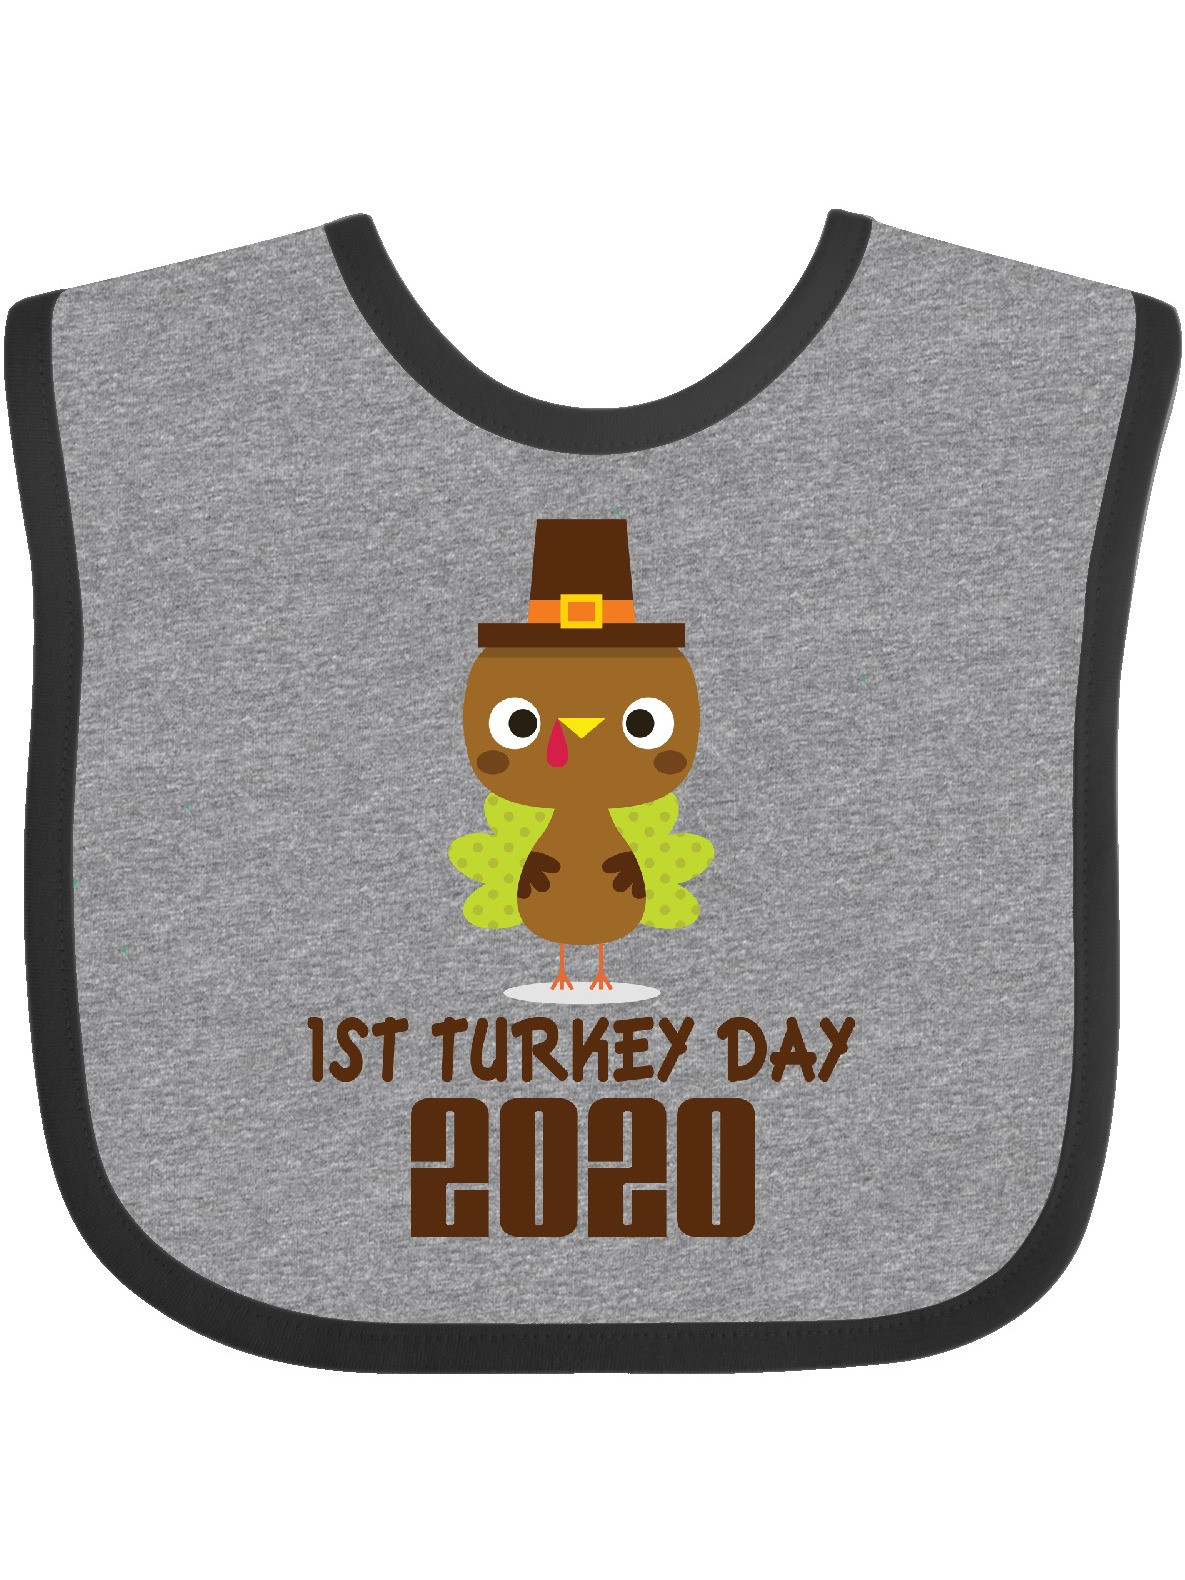 Turkey For Thanksgiving 2020
 1st Thanksgiving Turkey Day 2020 Baby Bib Walmart